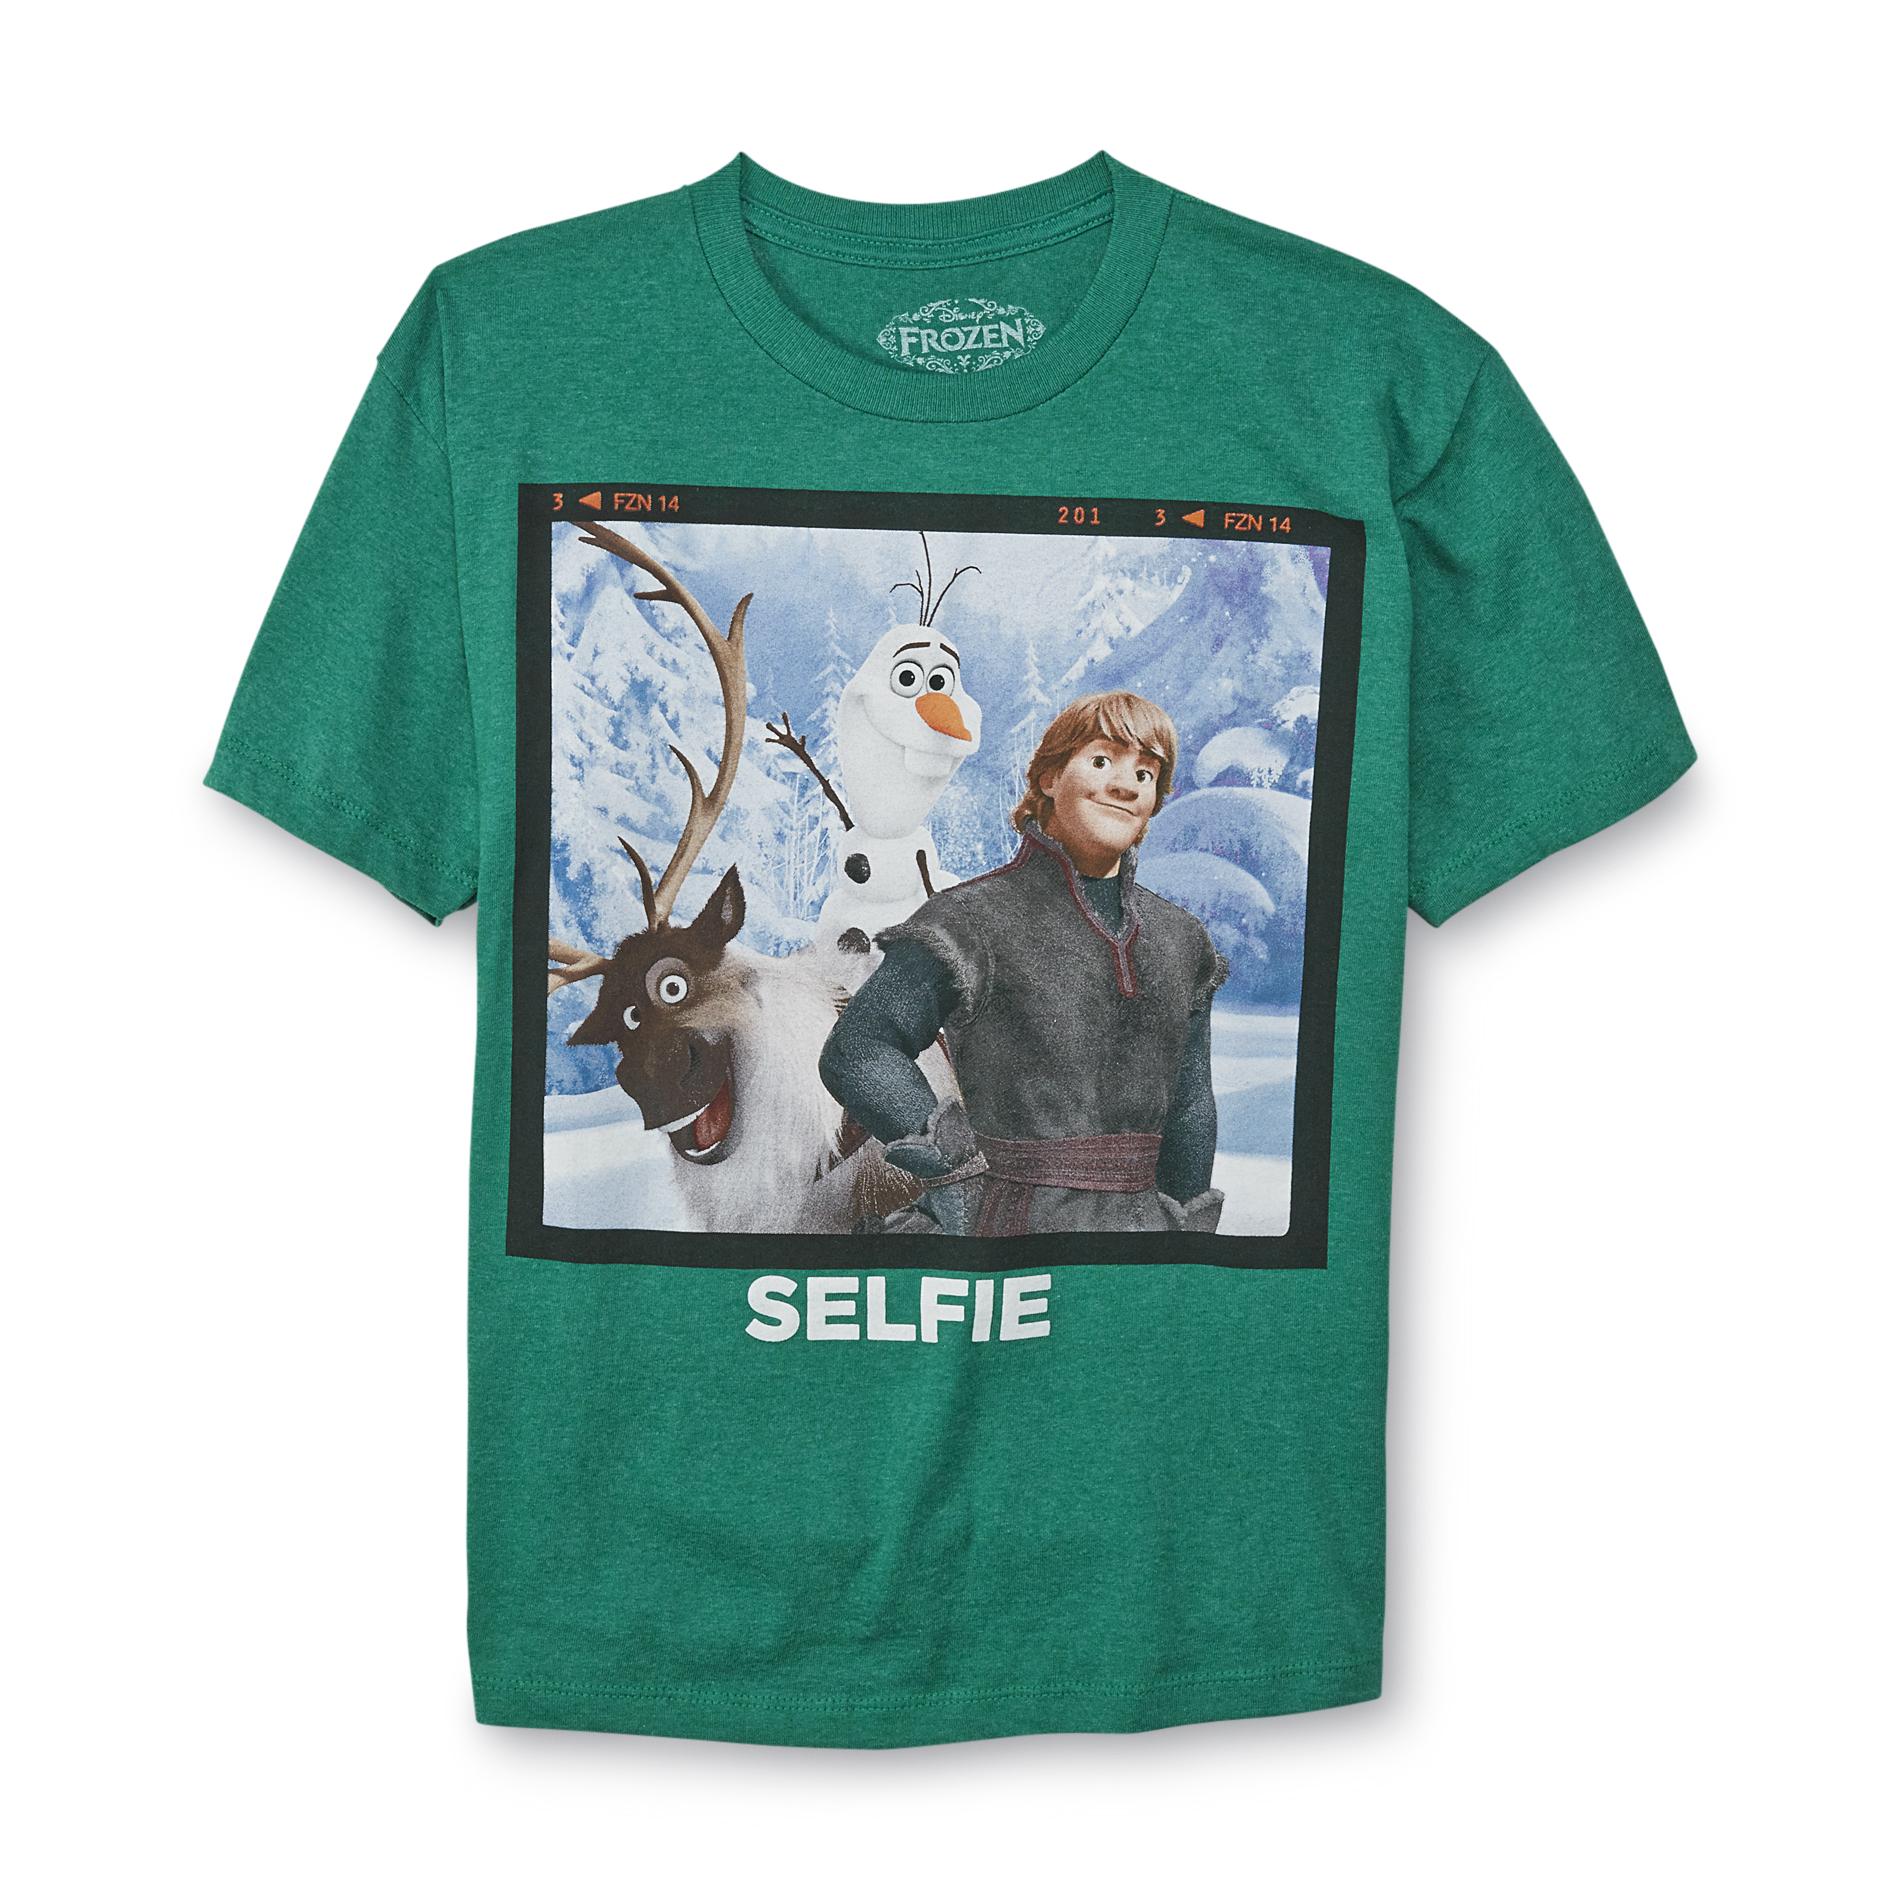 Disney Frozen Boy's Graphic T-Shirt - Selfie